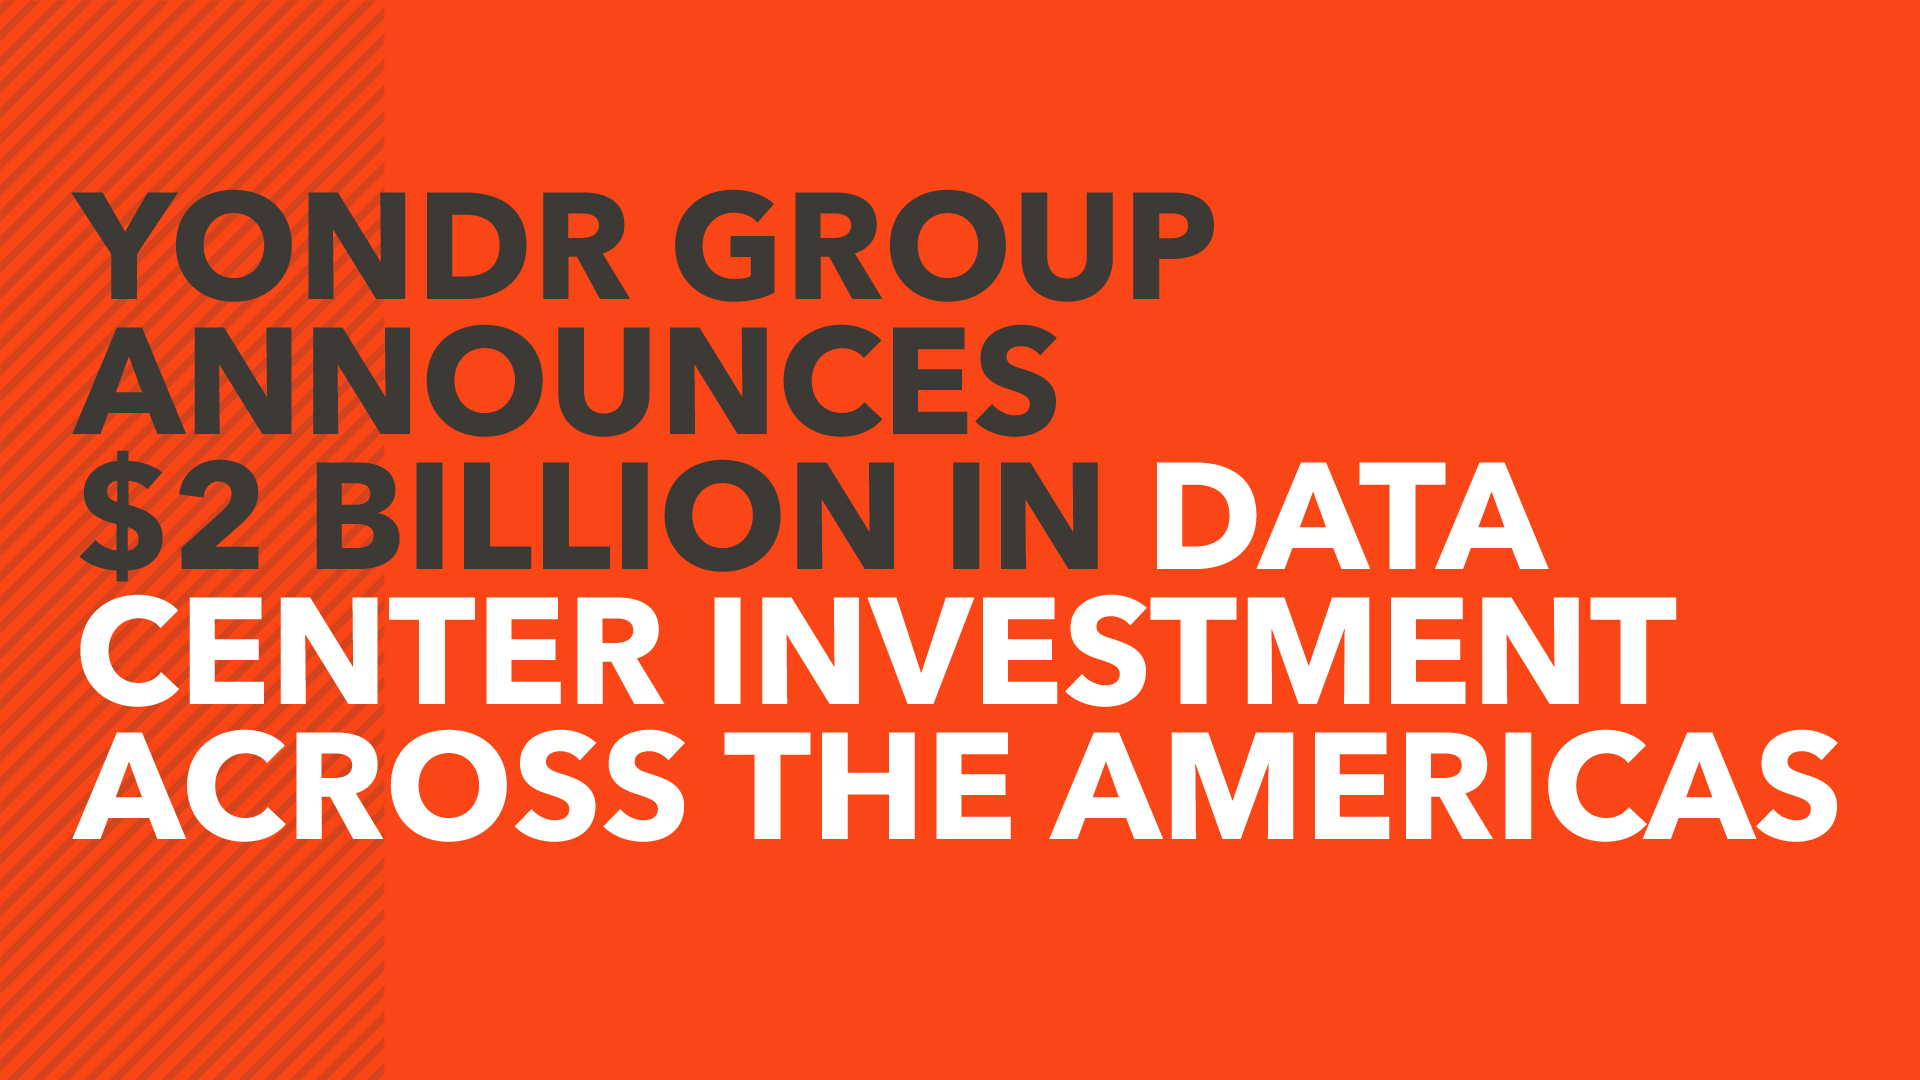 Yondr Group Announces $2 Billion in Data Center Investment Across the Americas